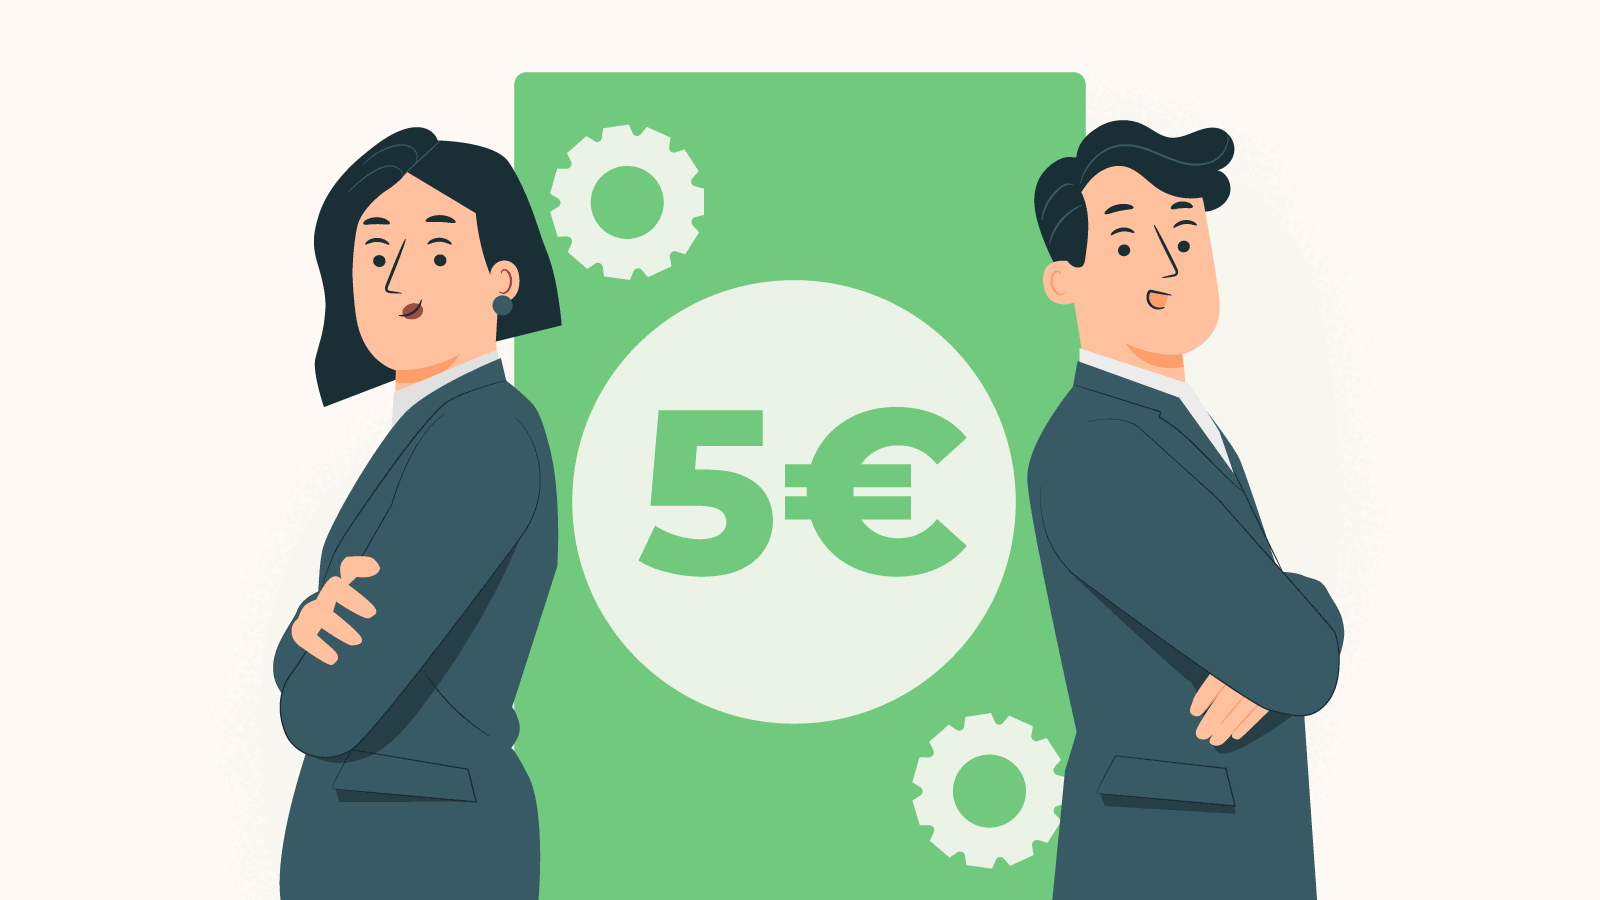 How do we test €5 no deposit bonuses